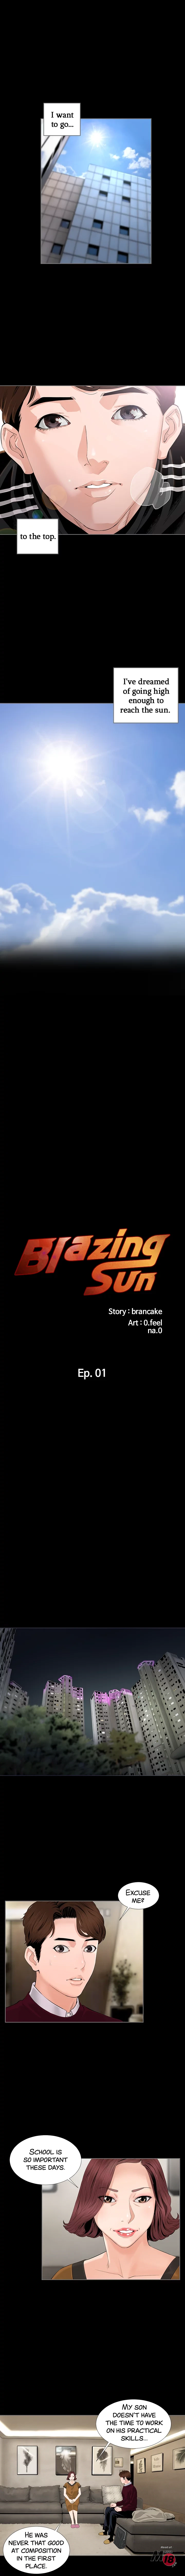 Blazing Sun - Chapter 1 Page 2